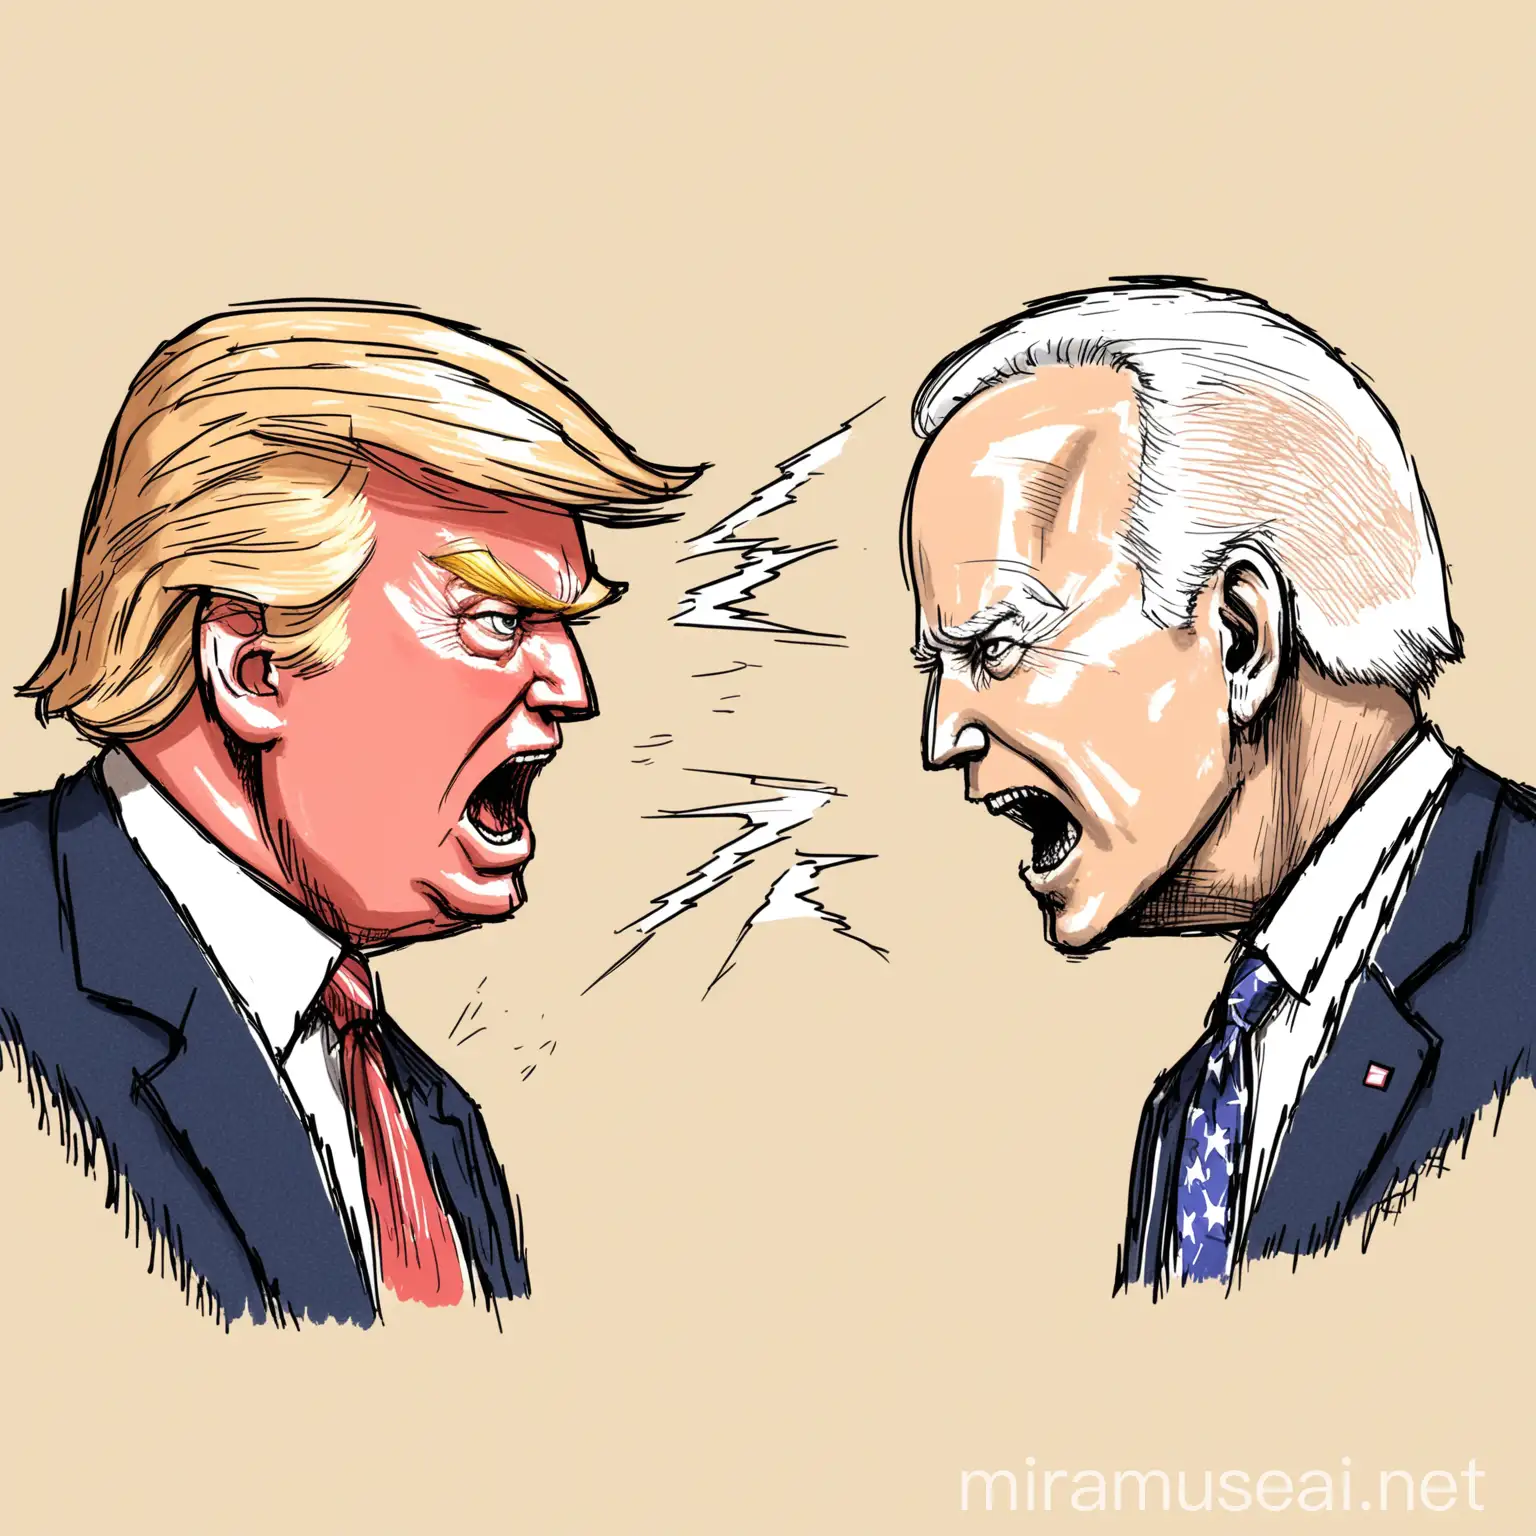 Political Debate Illustration Featuring Donald Trump and Joe Biden